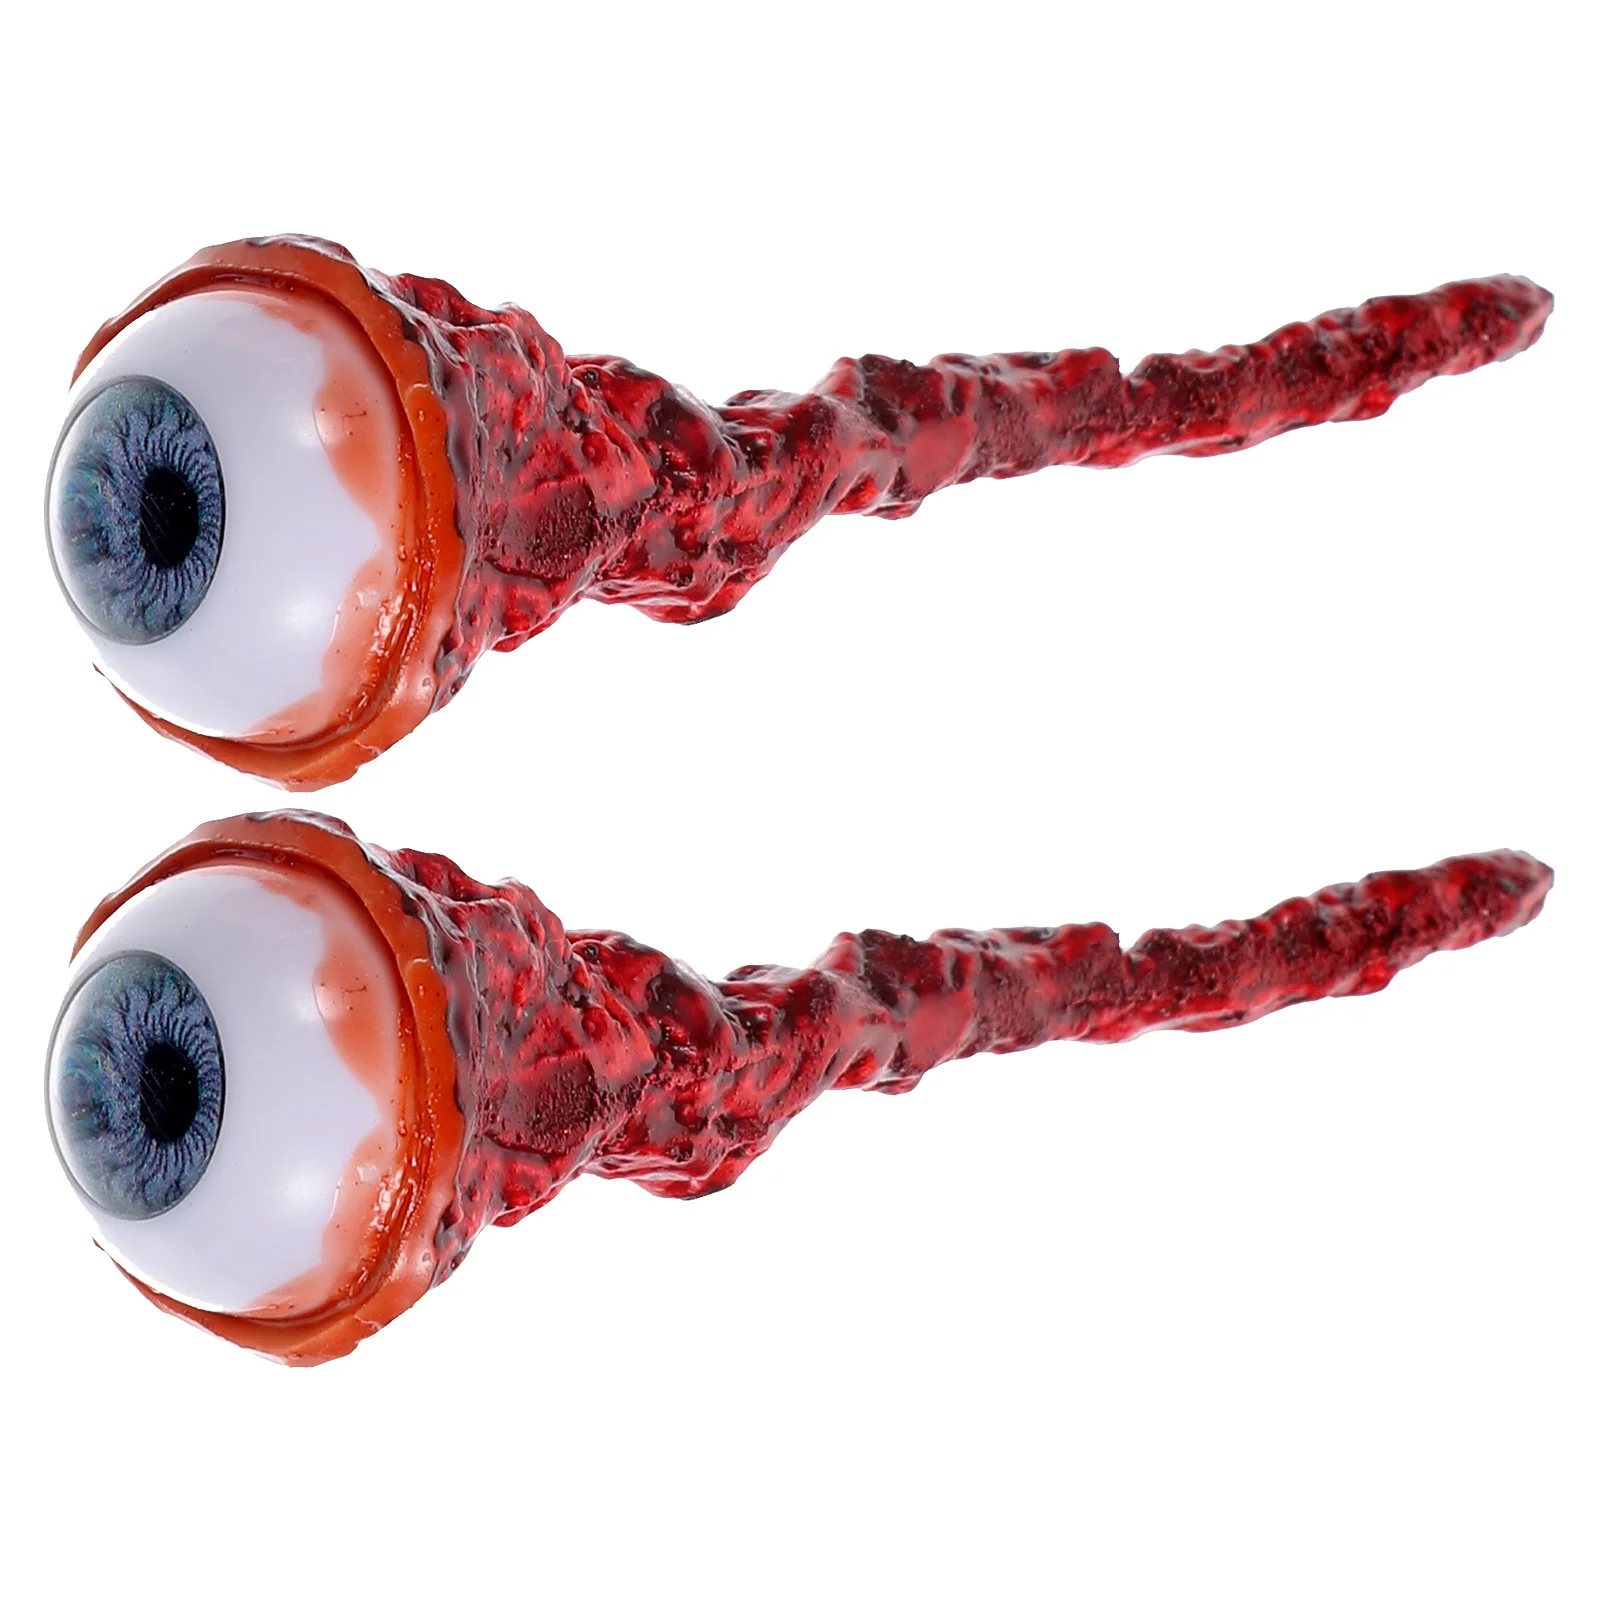 

2 Pcs Interesting Eyeball Props Outdoor Toys Indoor Halloween Latex Fake Scary Emulsion Festival Horror Decoration